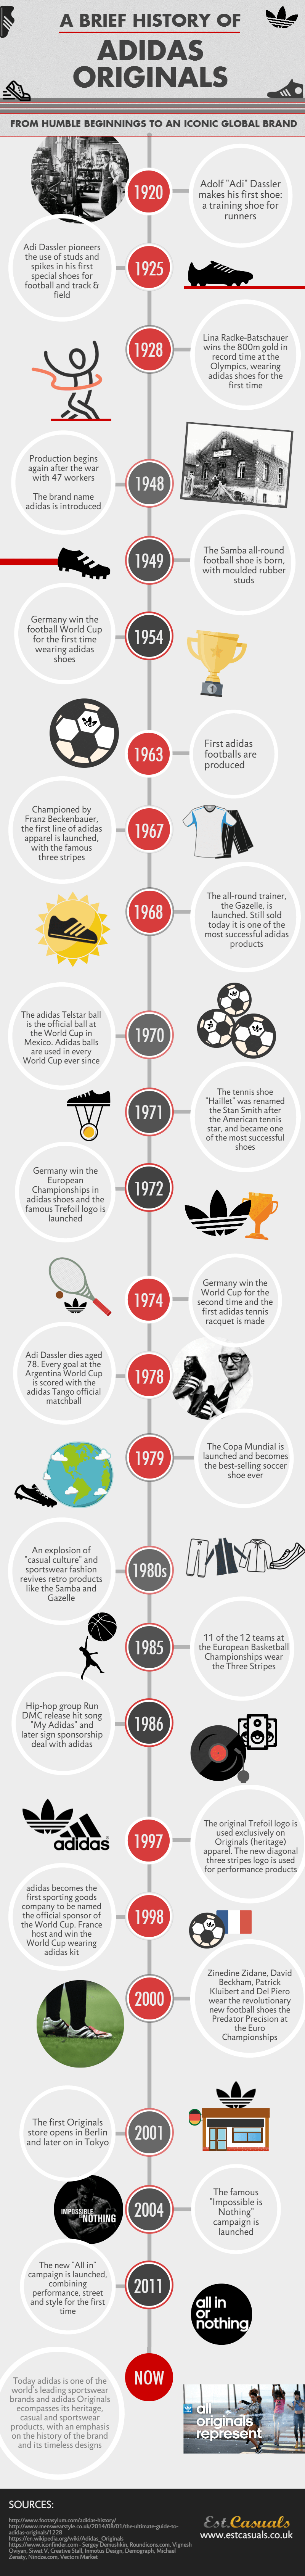 A Brief History of Adidas Originals - Dr. Nick's Running Blog